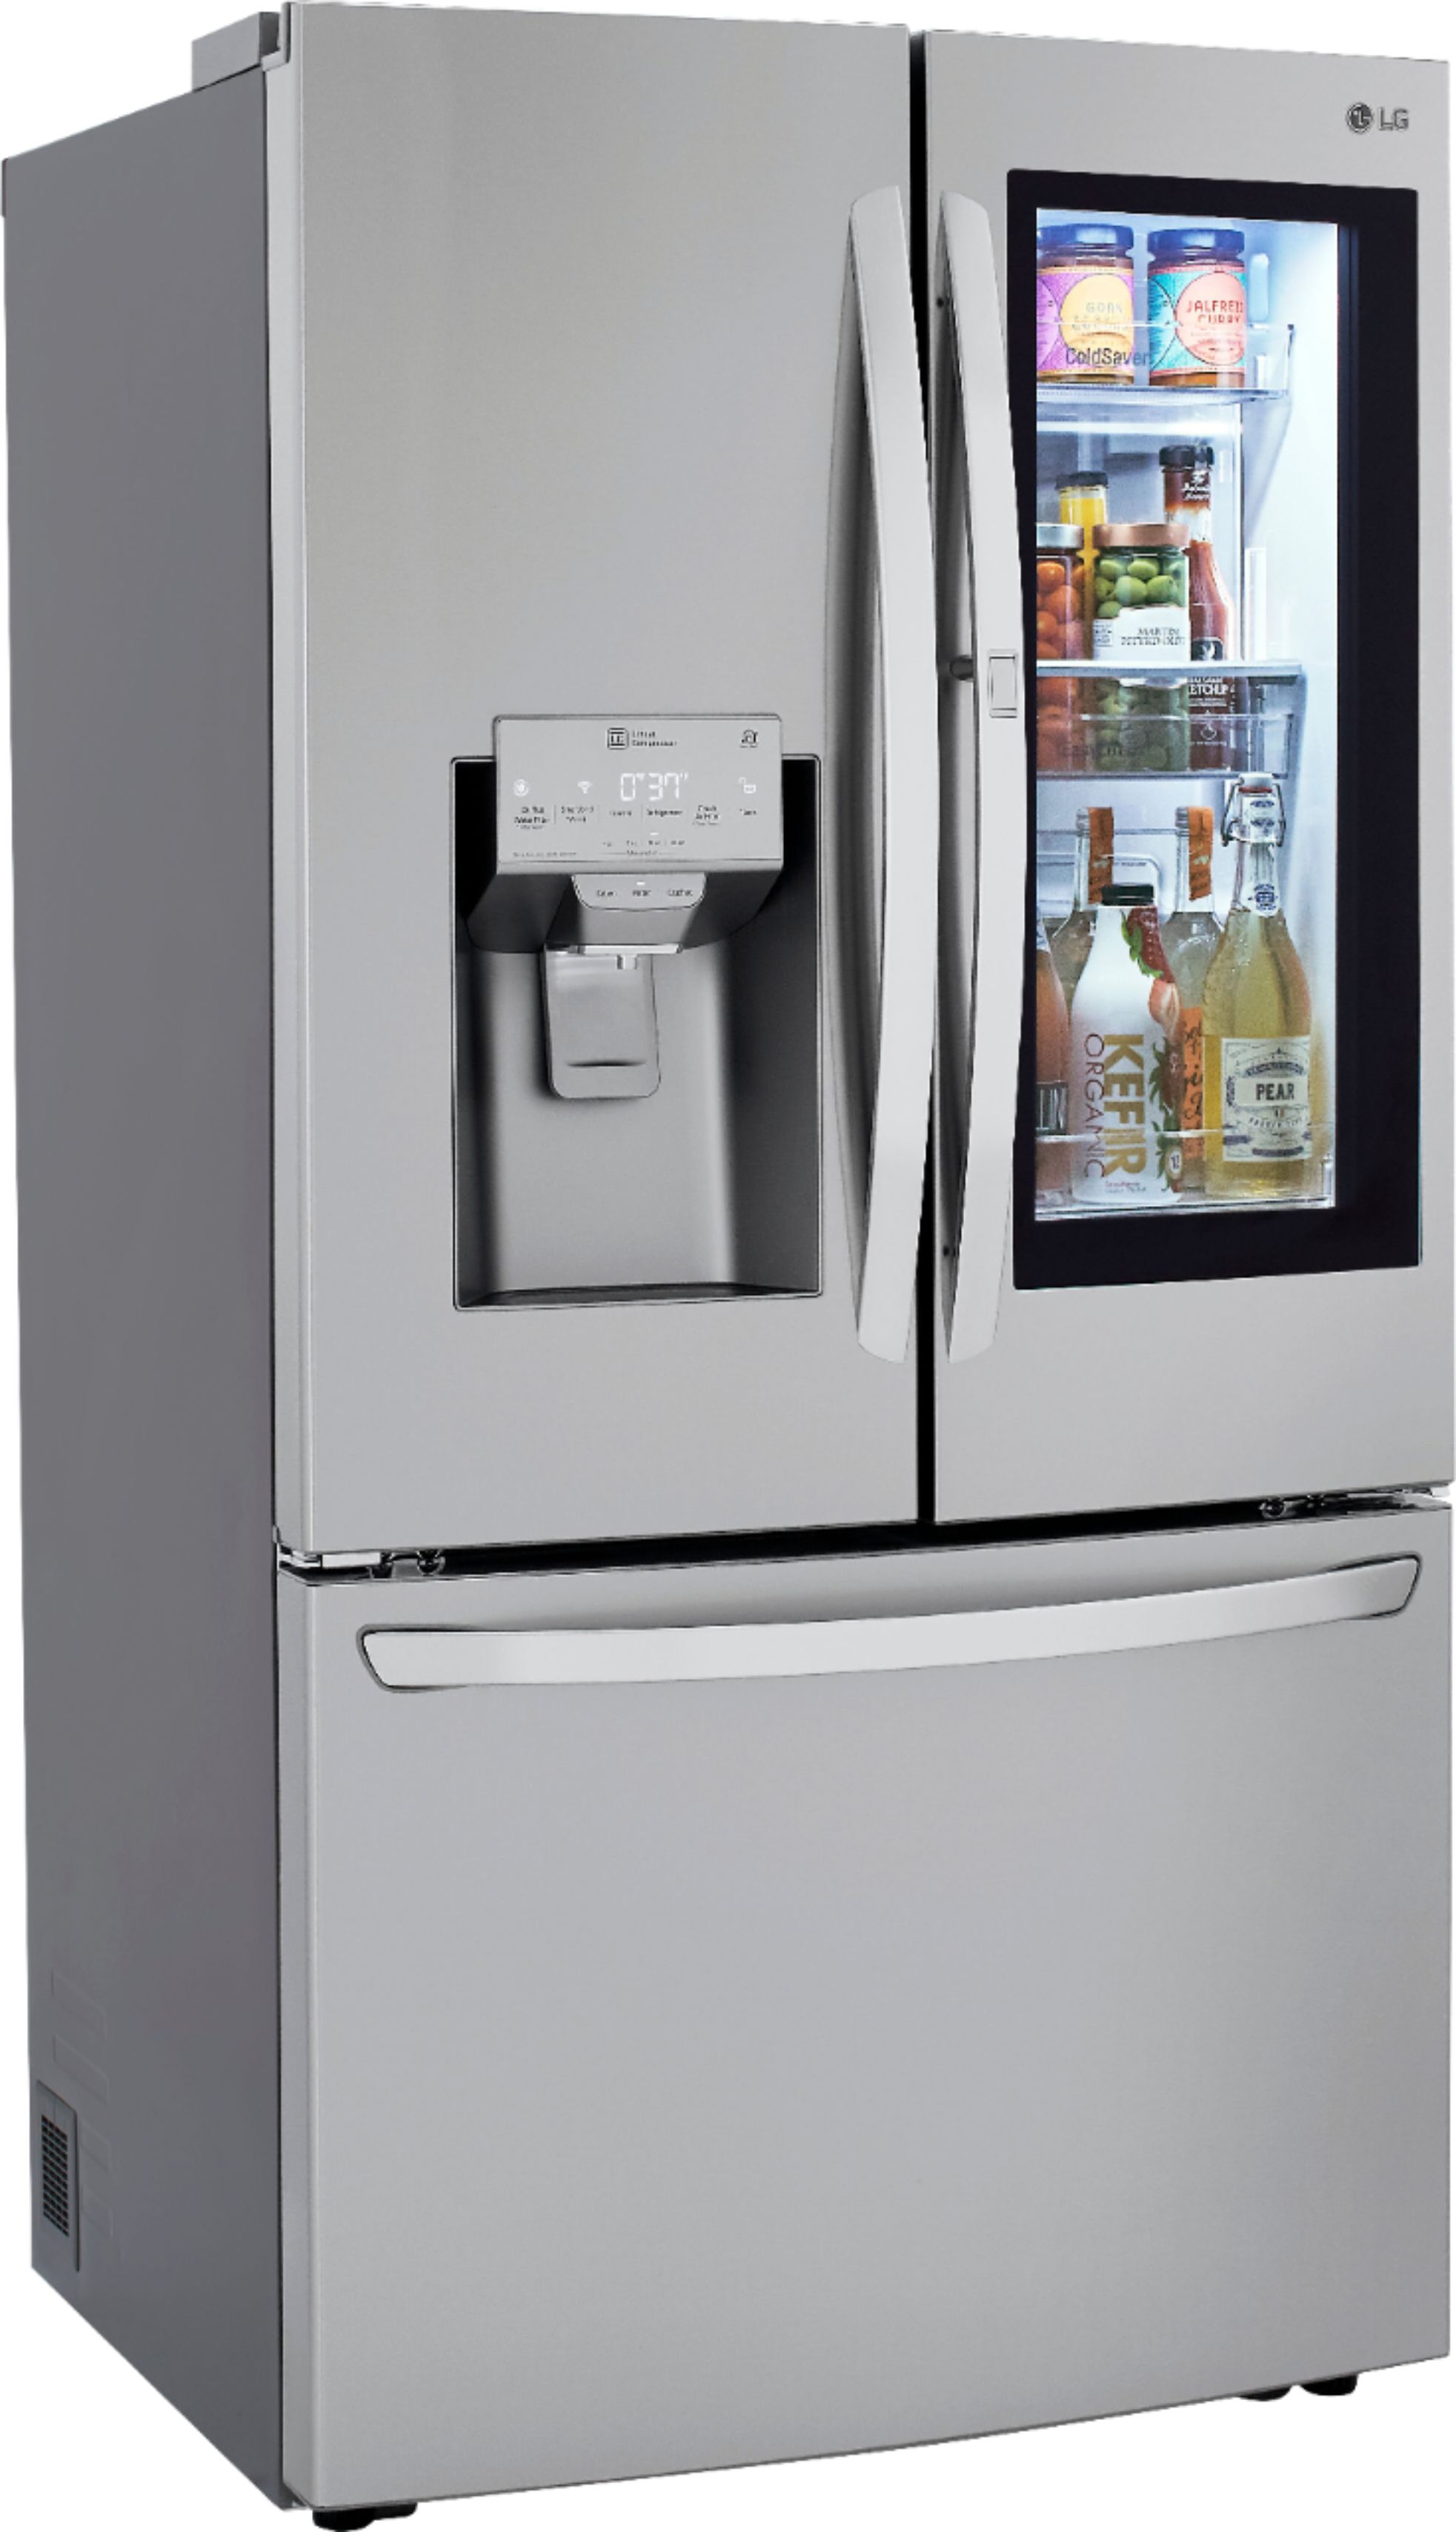 37++ Lg lrfvs3006s refrigerator reviews information